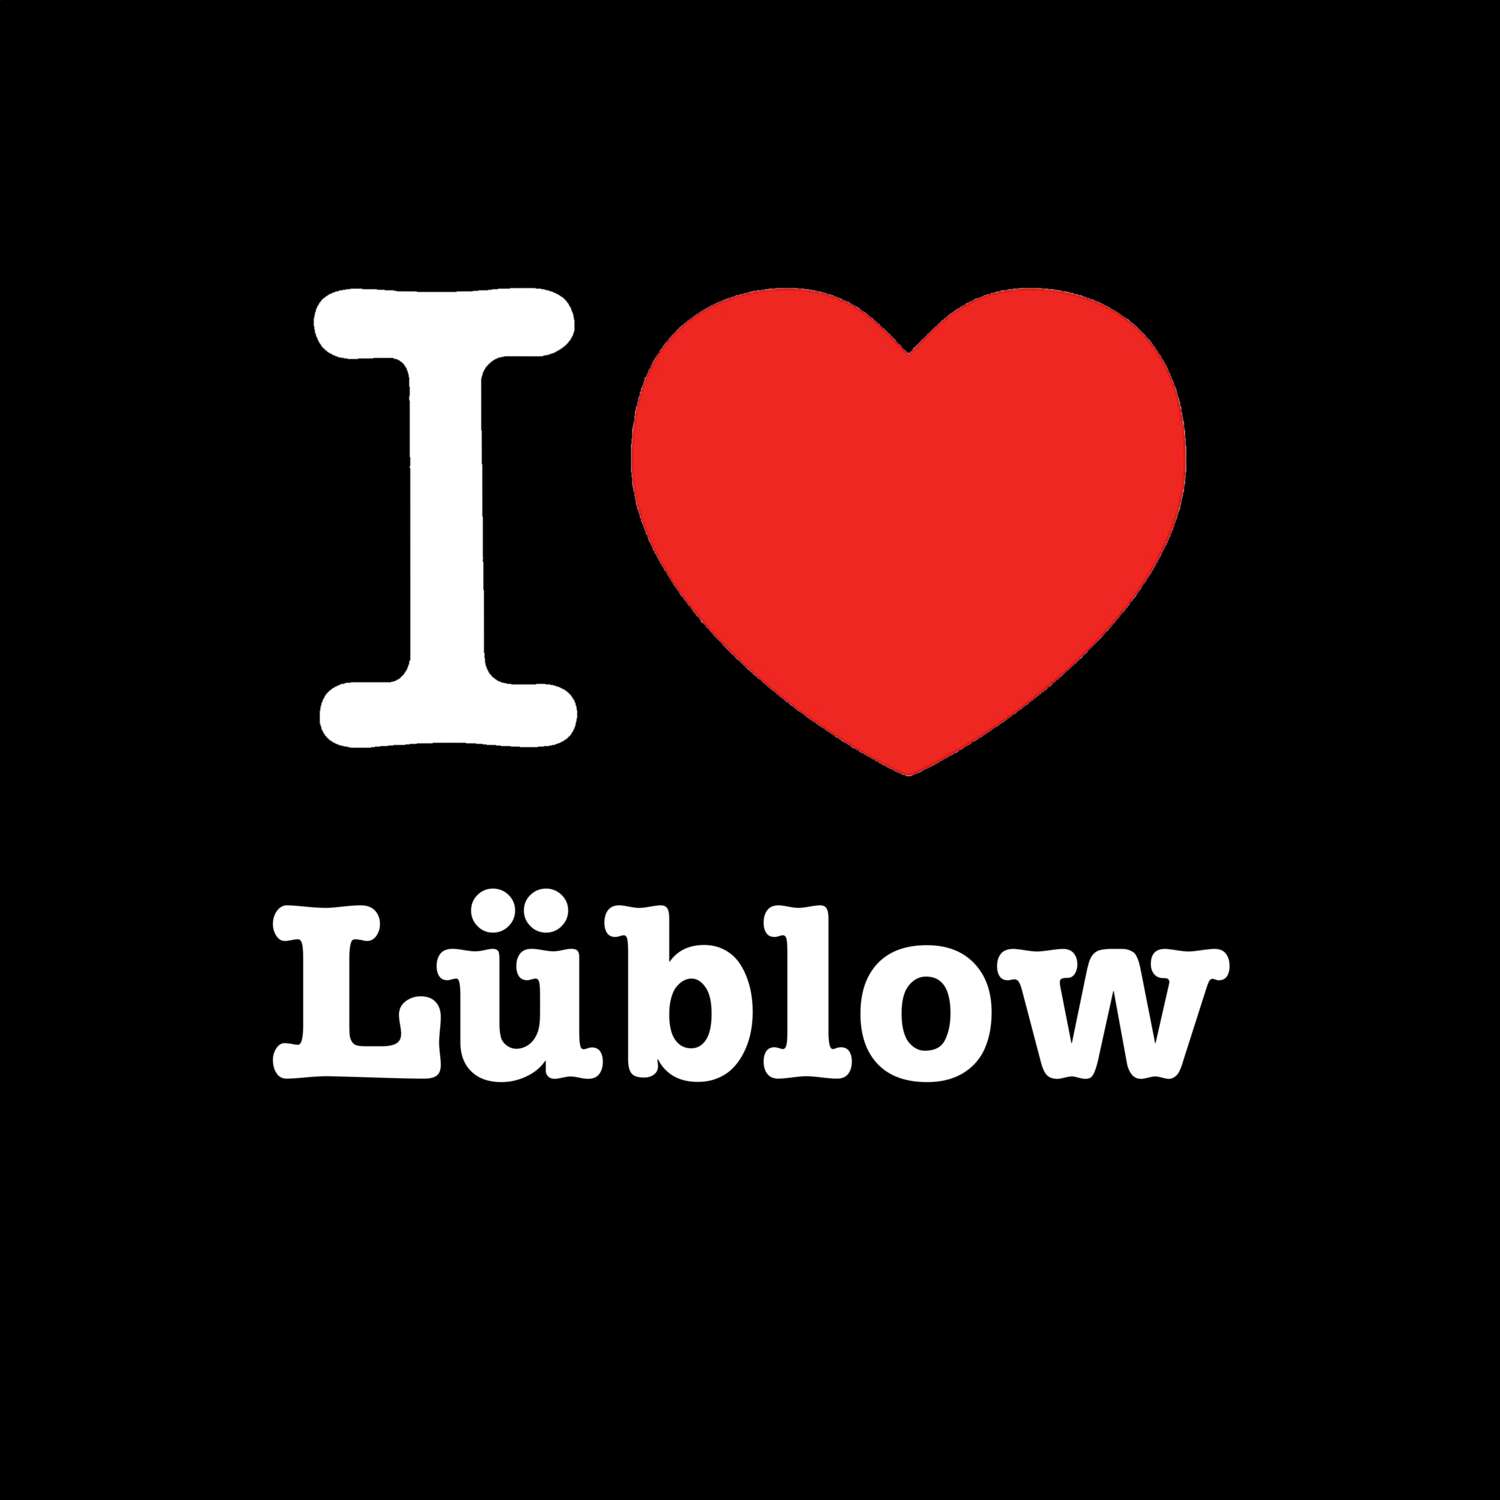 Lüblow T-Shirt »I love«